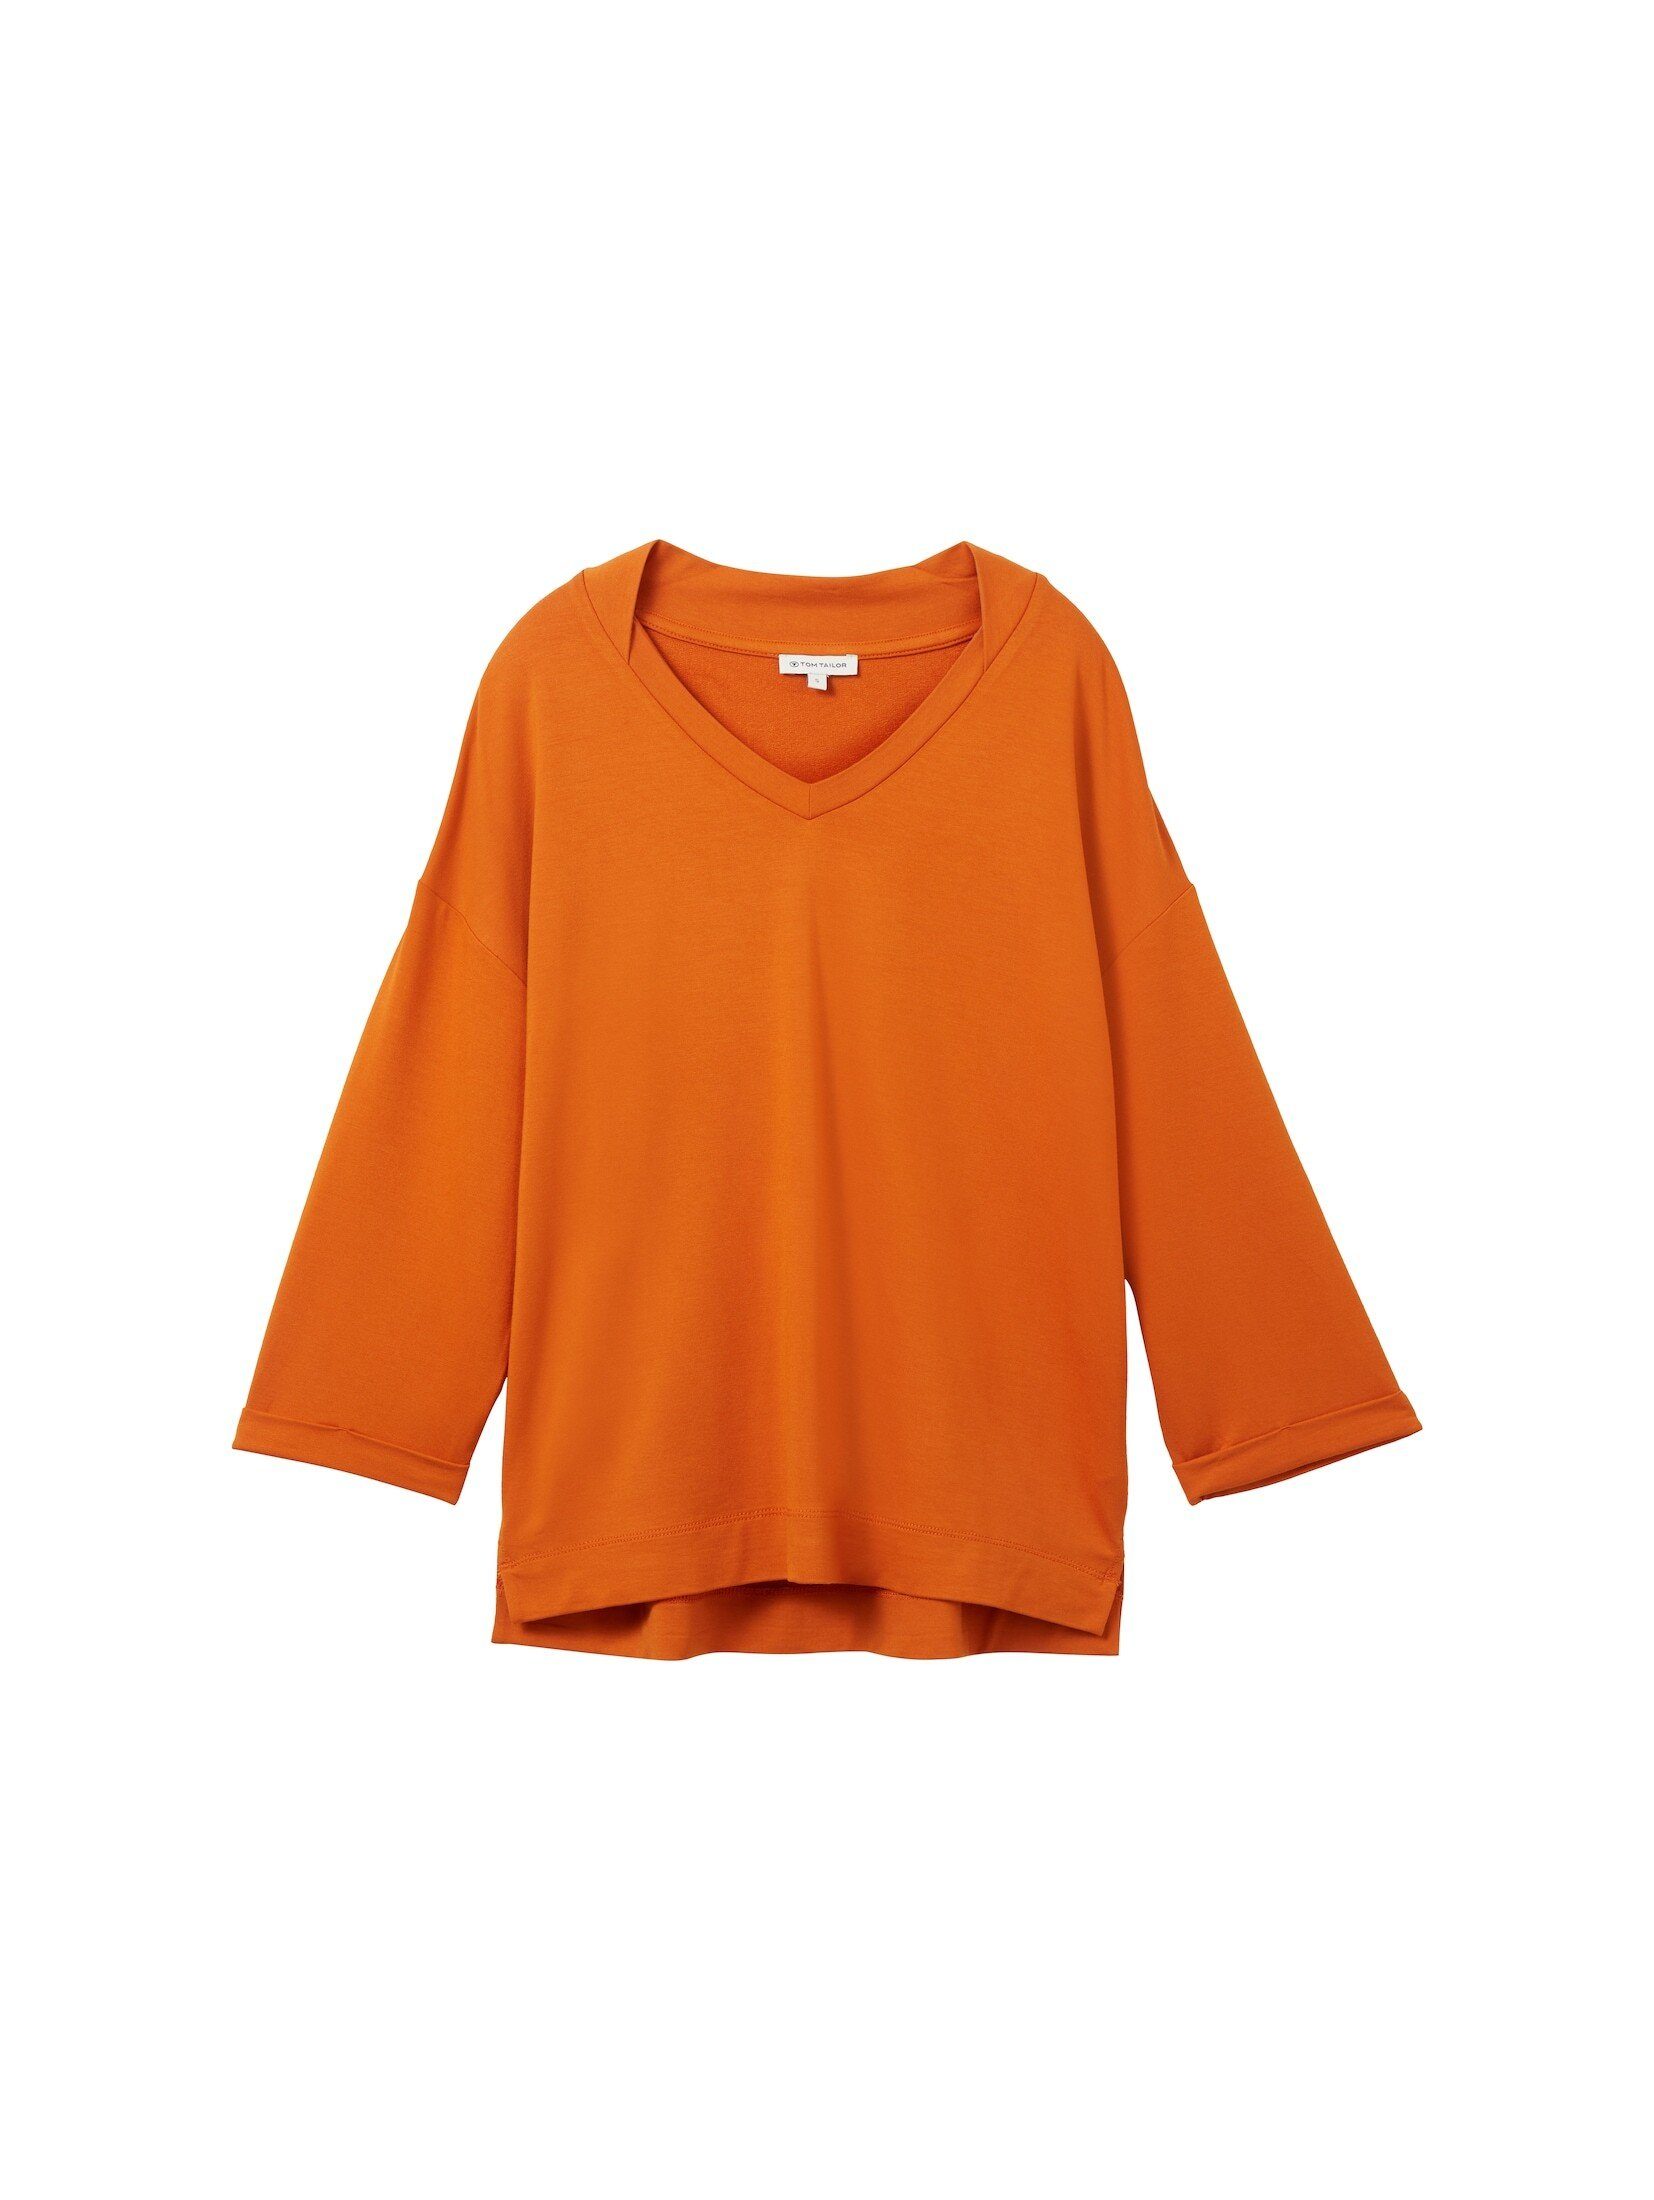 V-Ausschnitt flame T-Shirt TAILOR TOM mit 3/4 Arm gold Shirt orange